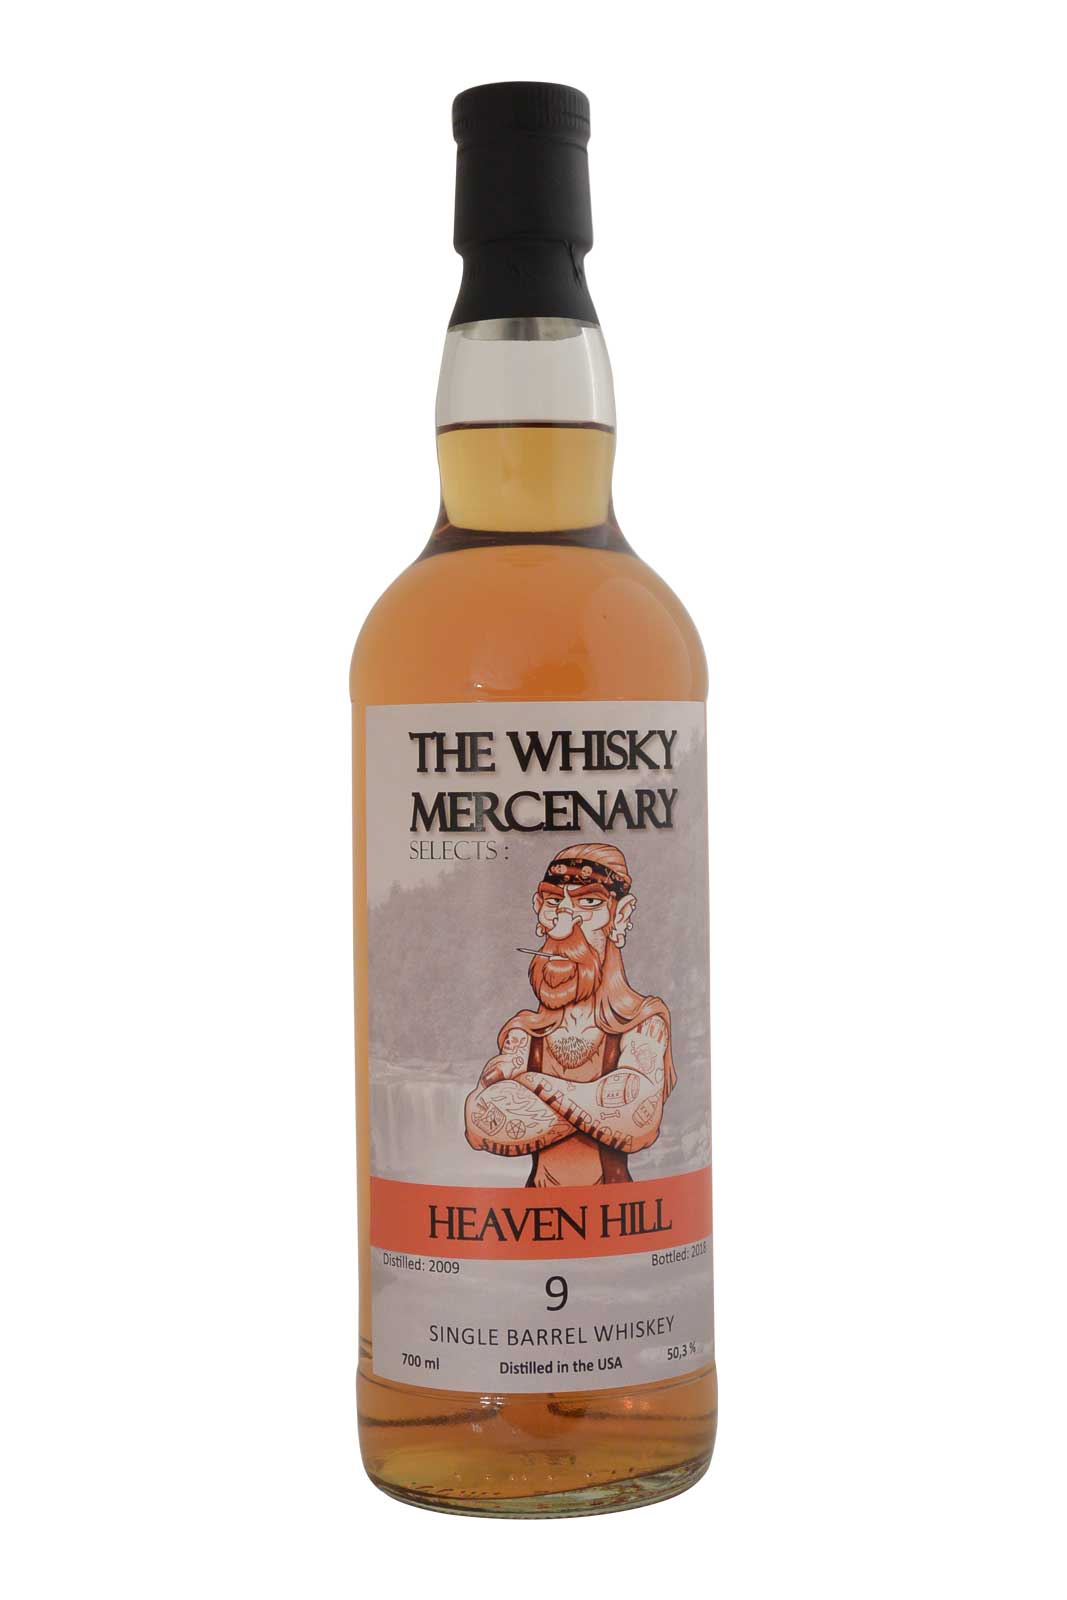 The Whisky Mercenary 9 Year Old Heaven Hill